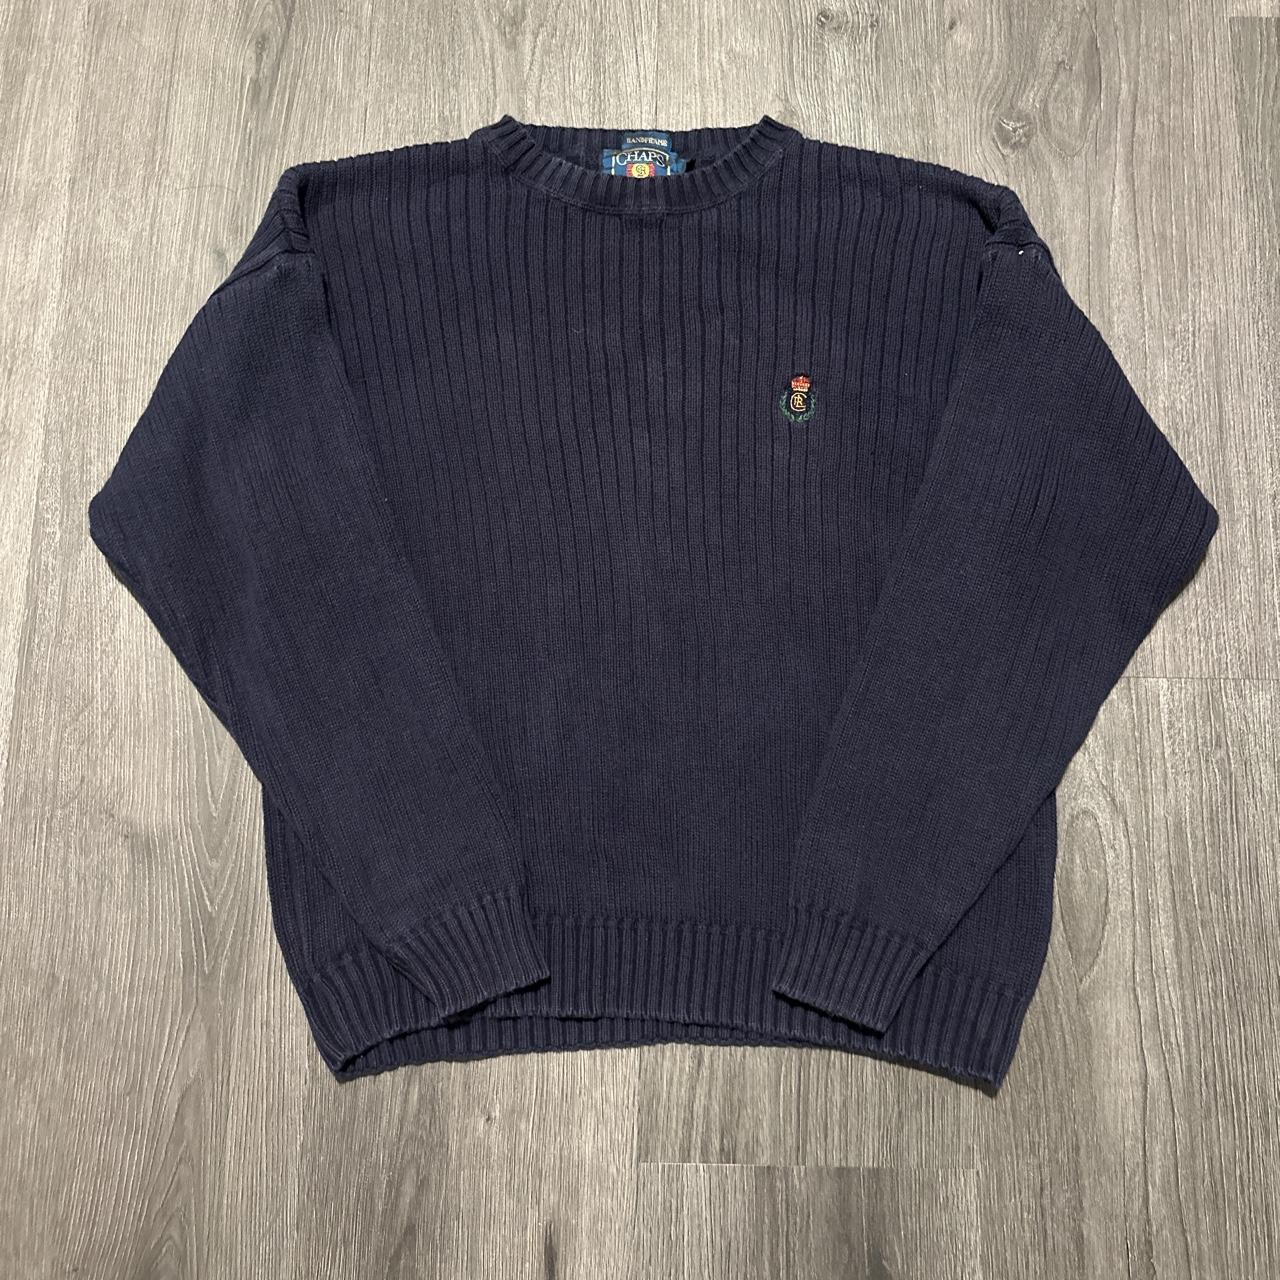 Chaos Ralph Lauren sweater in great condition Size... - Depop